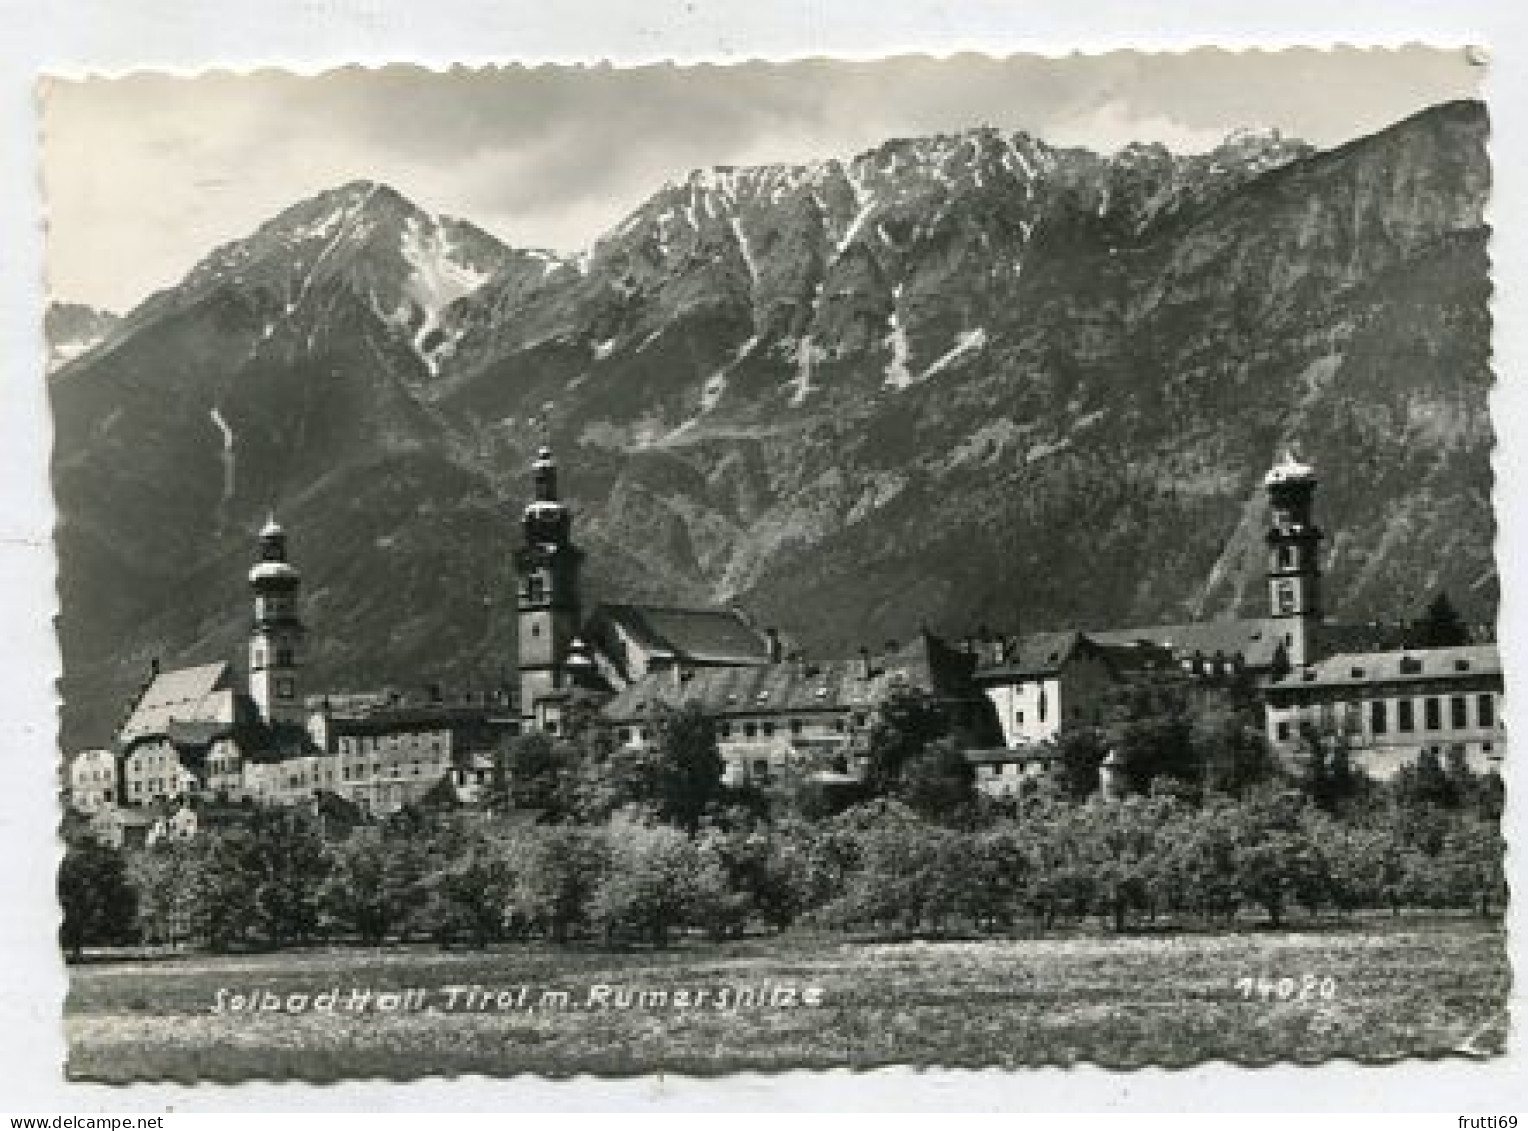 AK 190922 AUSTRIA - Solbad Hall In Tirol M. Rumerspitze - Hall In Tirol